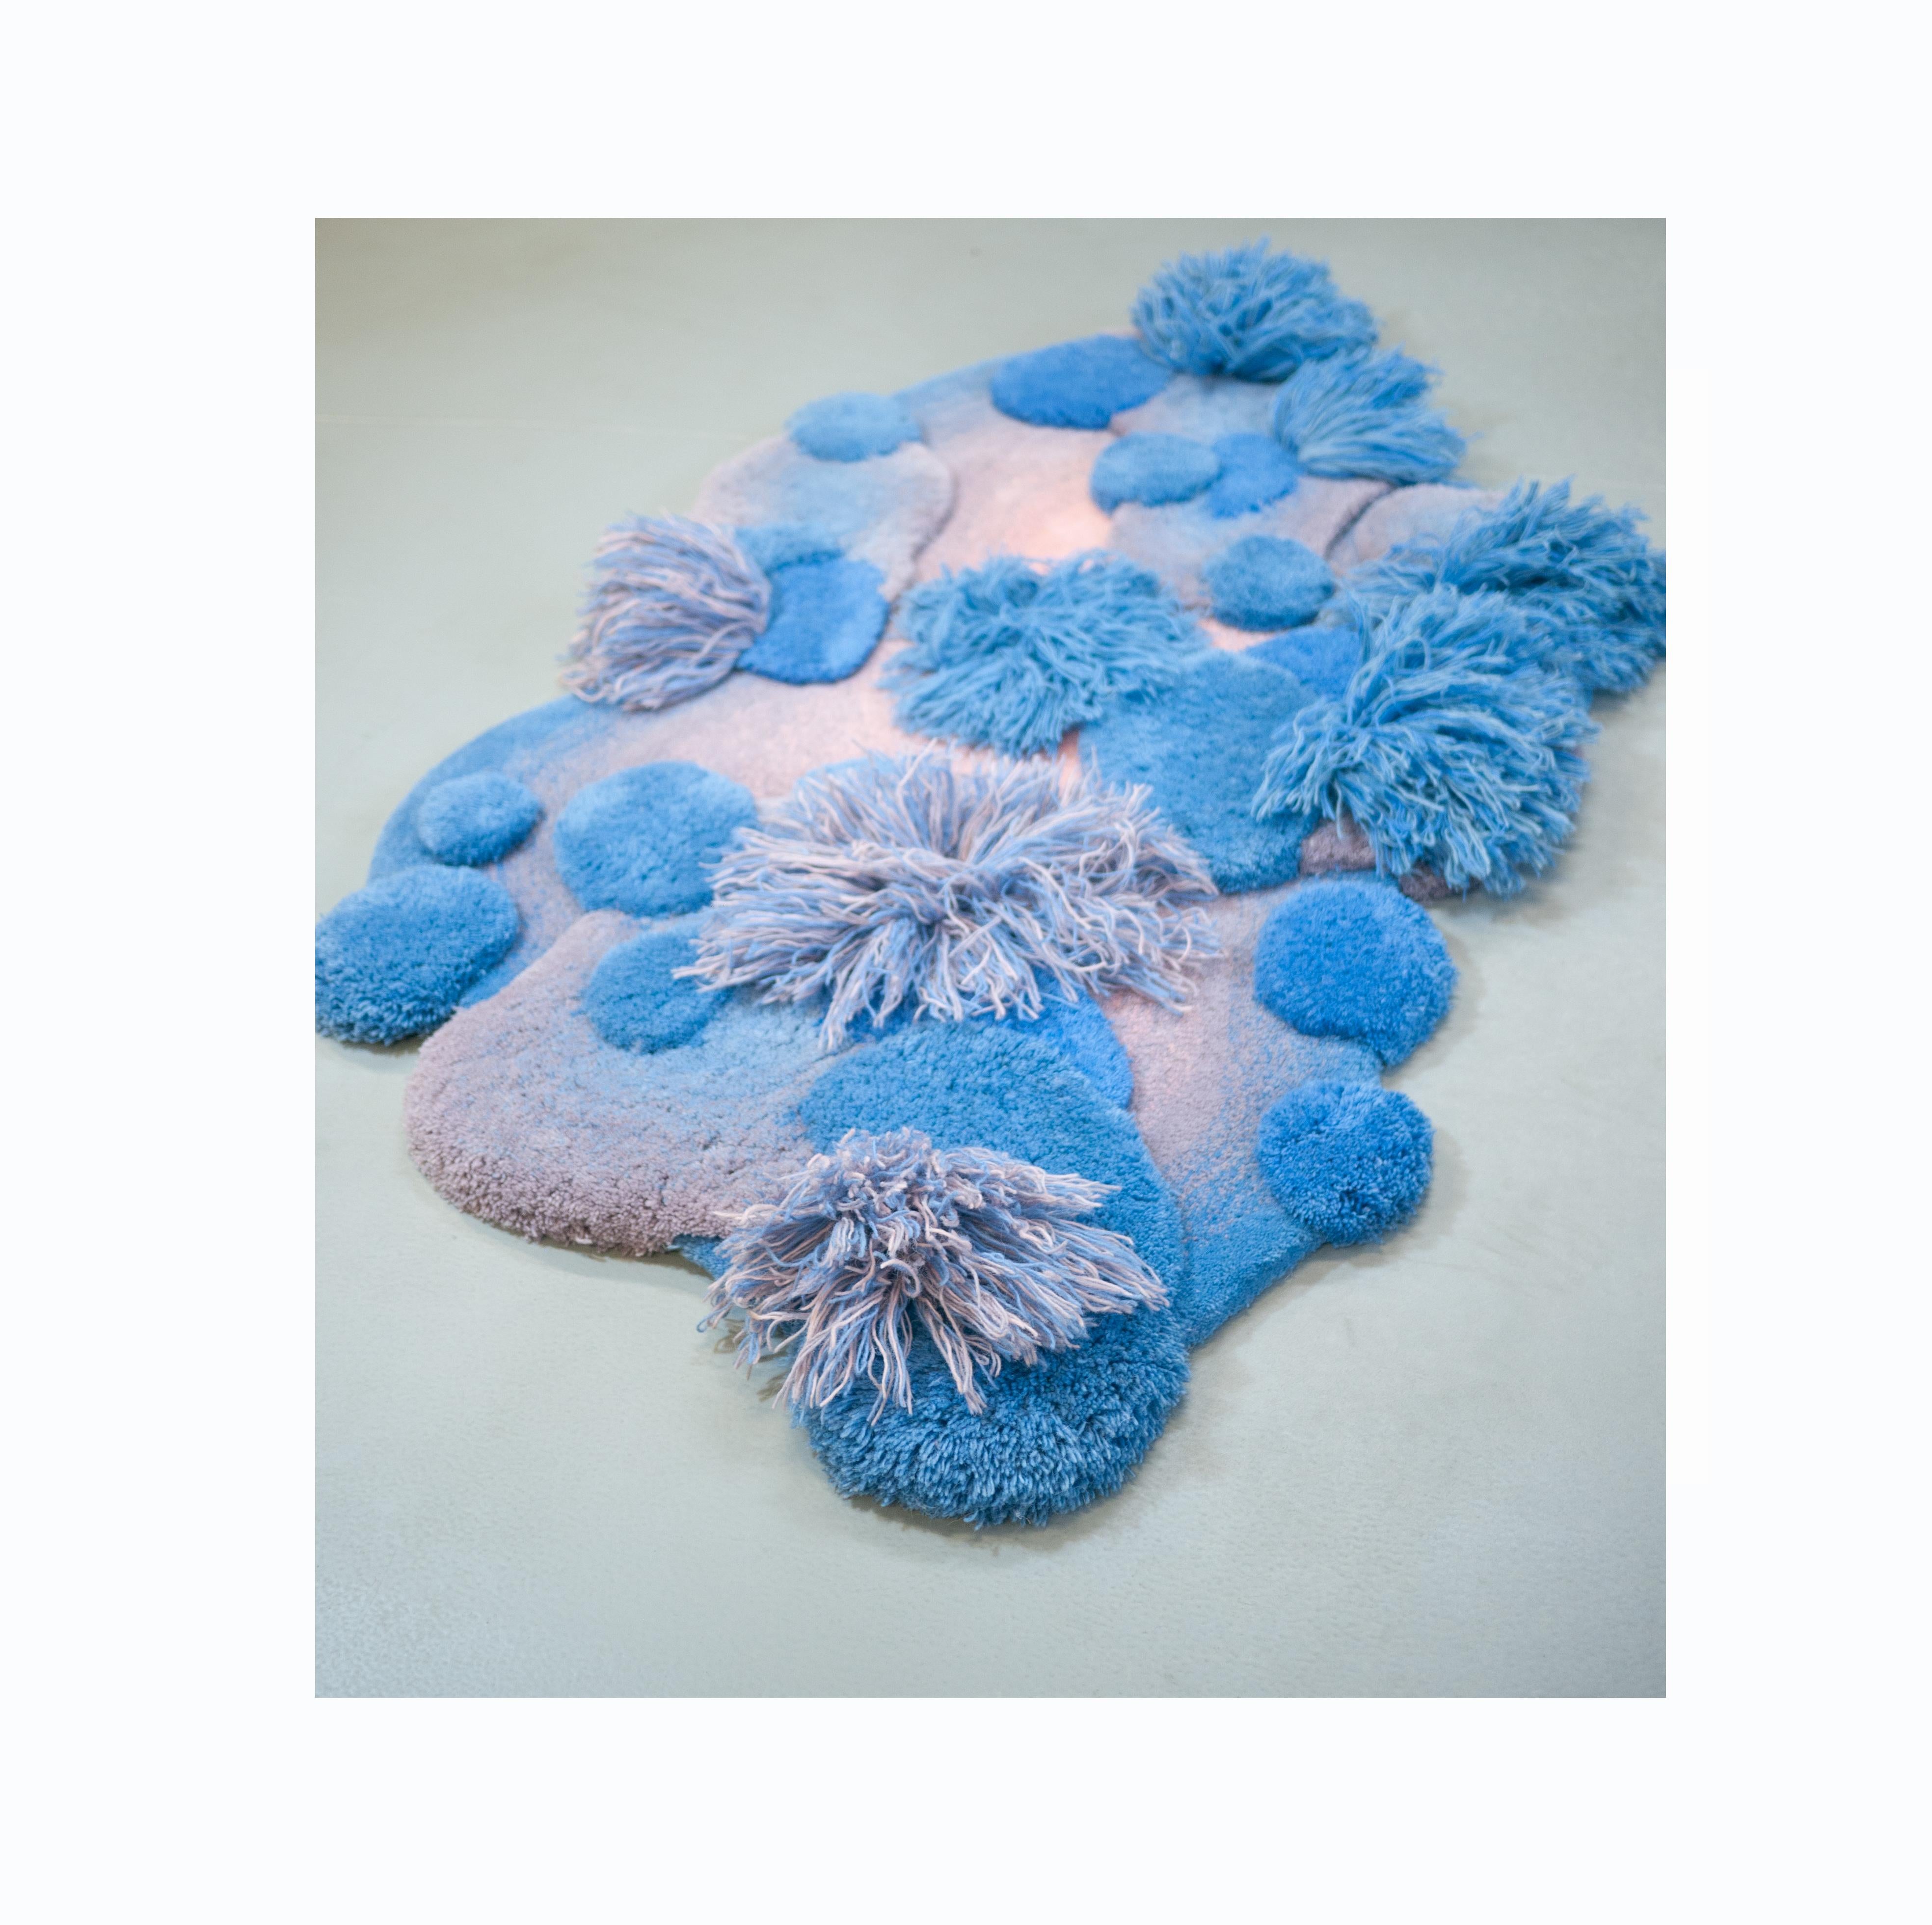 Contemporary, Wild Colourful Carpet, Cloud Jewel by Alfie Furry Friends 2